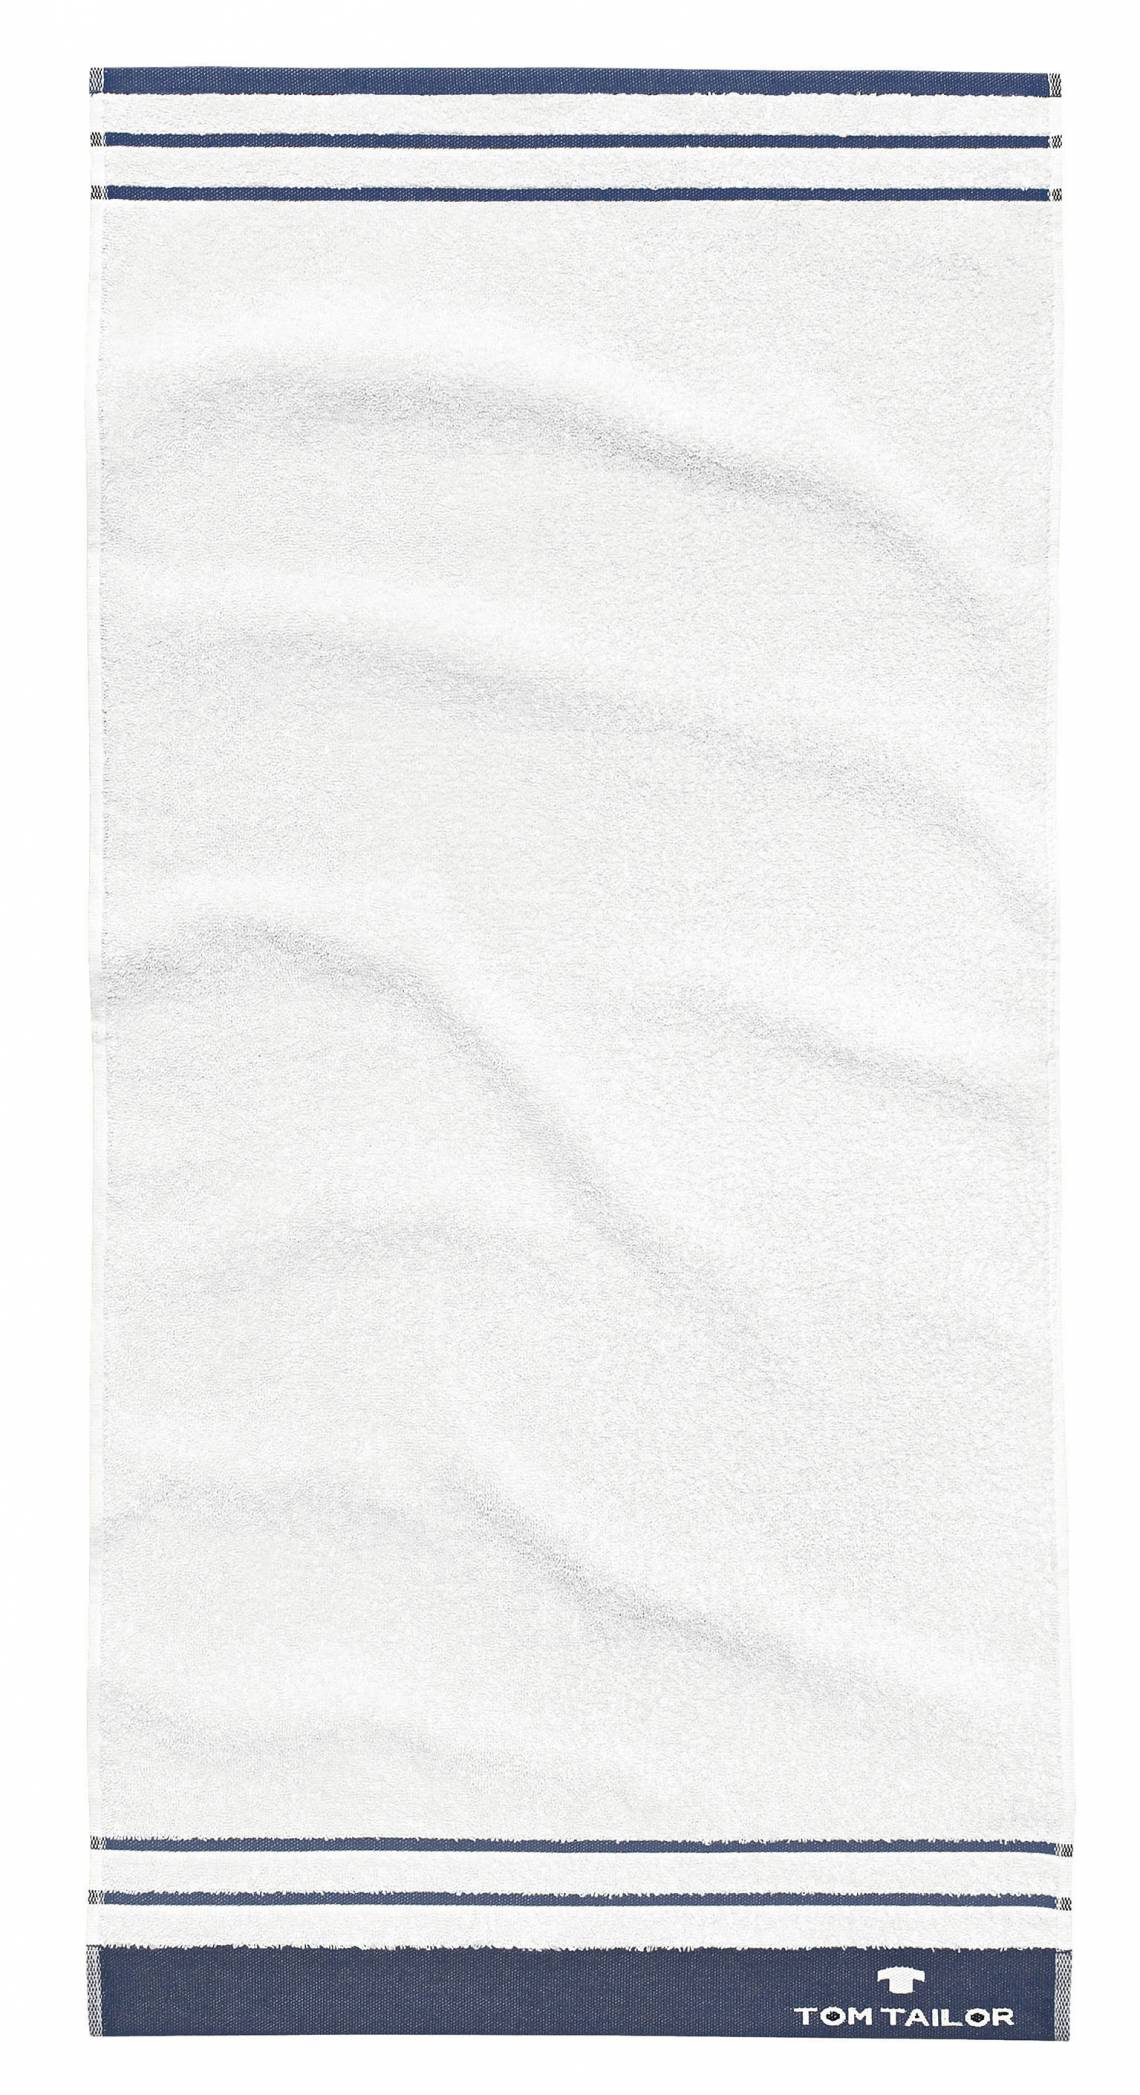 TOM TAILOR Maritim Towel white